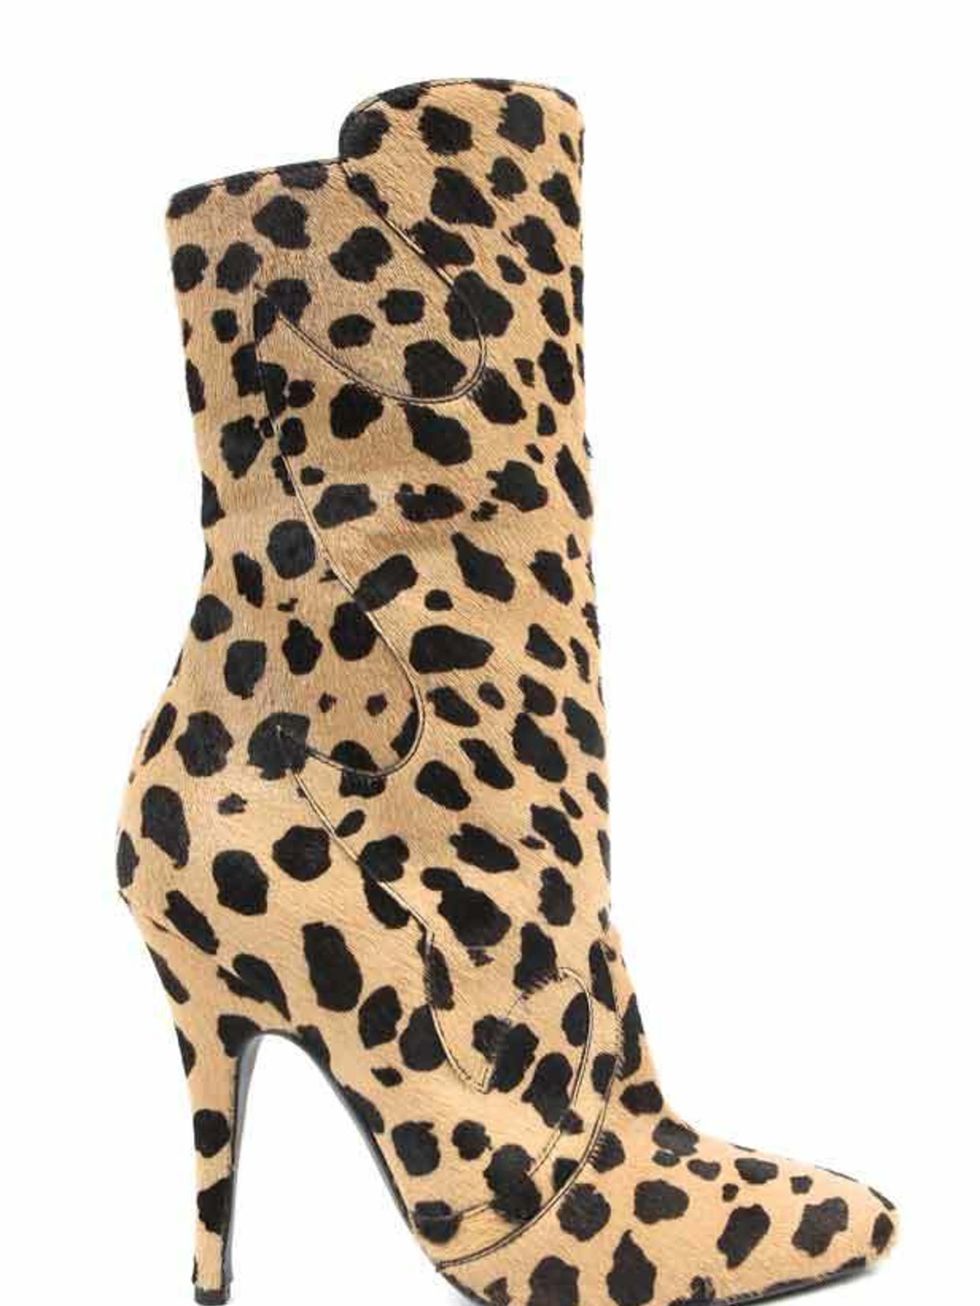 <p>Balmain leopard boot, £940, available from Harvey Nichols, 020 7235 5000</p>